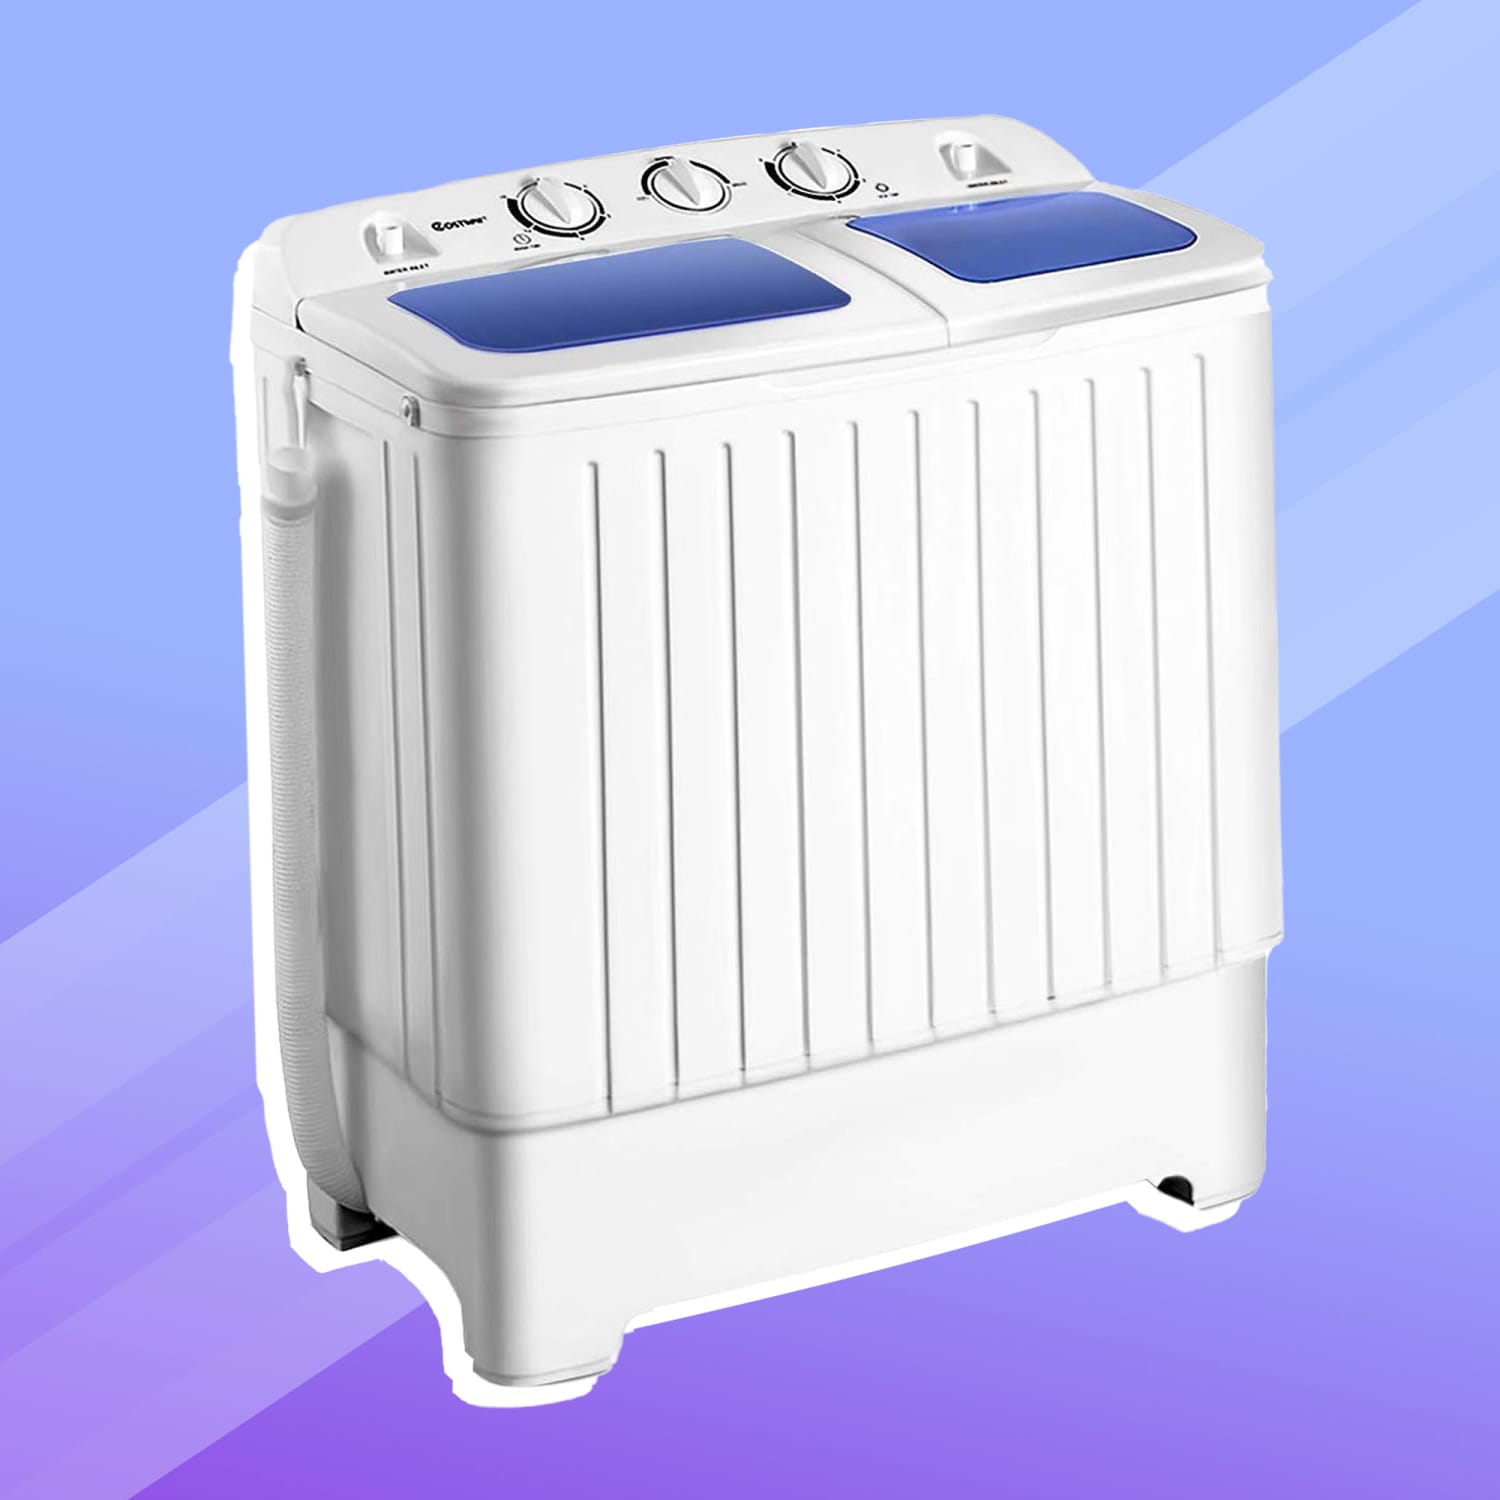 Small Portable Washing Machine